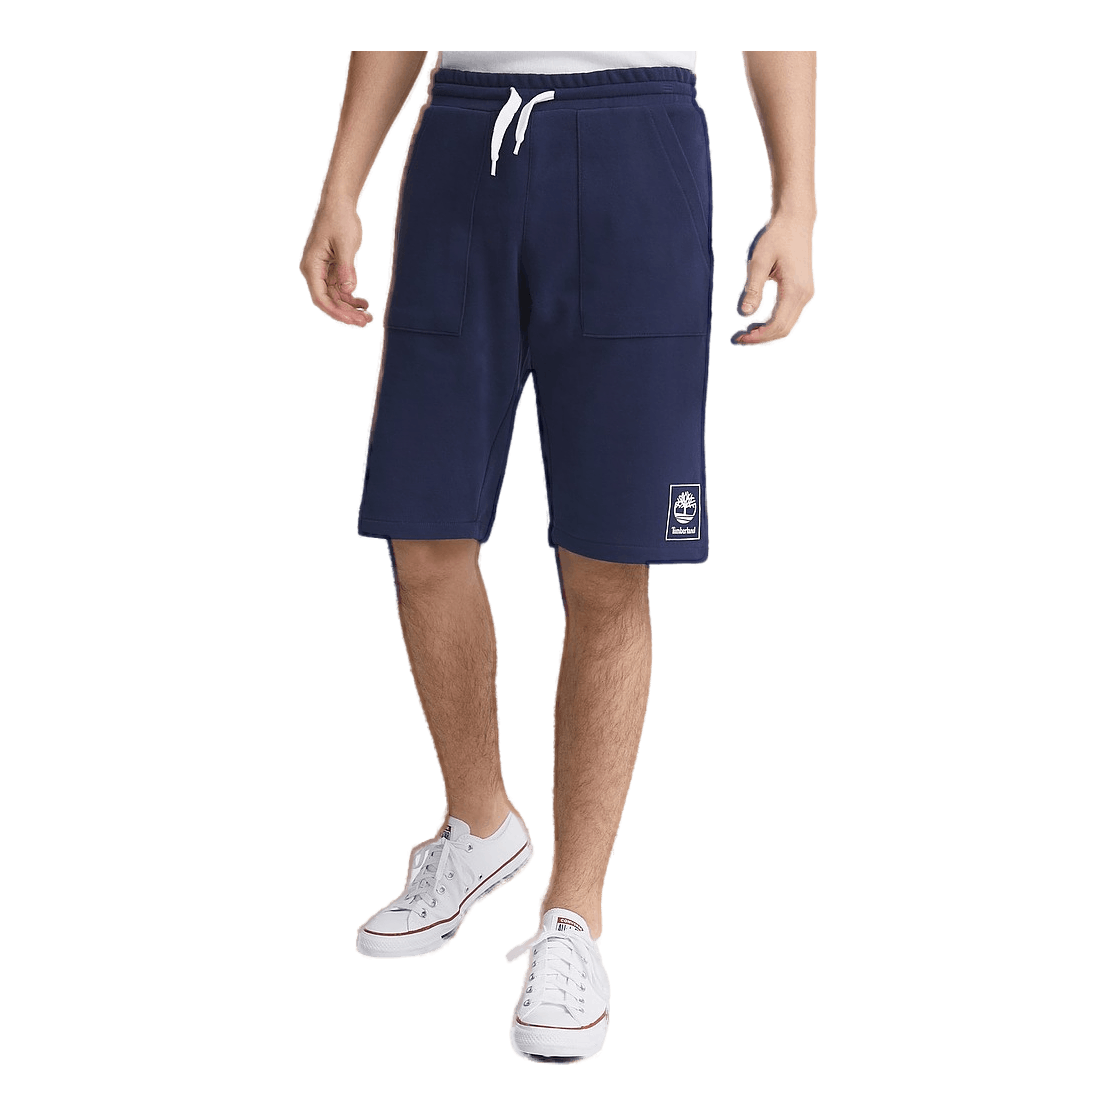 Bermuda Shorts 85t Navy